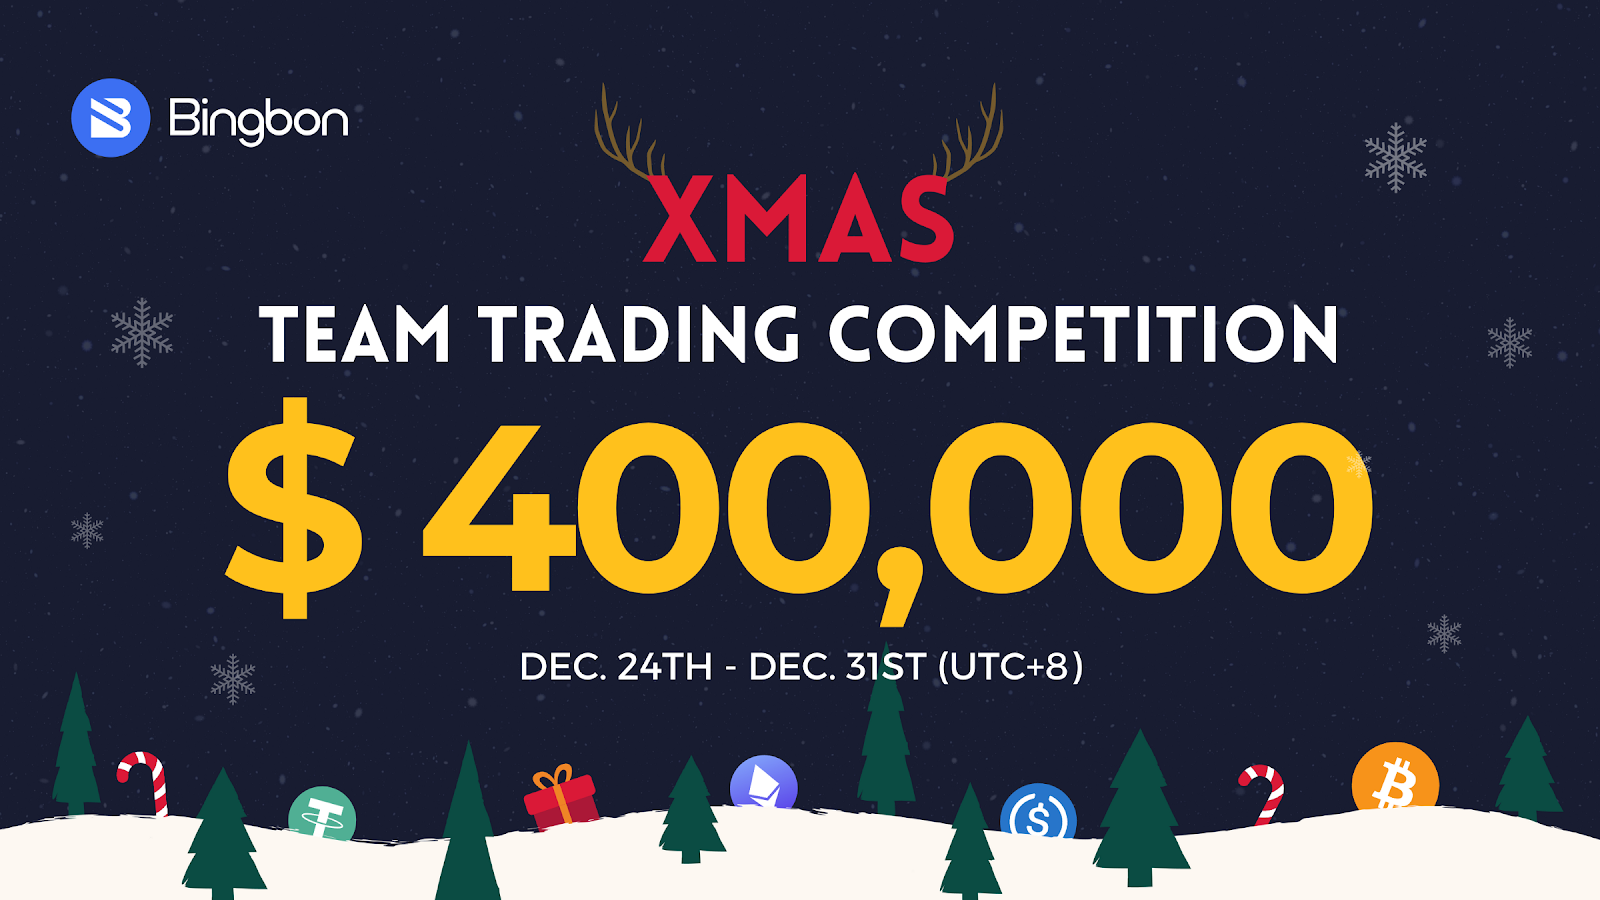 Tis the Season to Trade: Bingbon Gears Up For Xmas Trading Contest